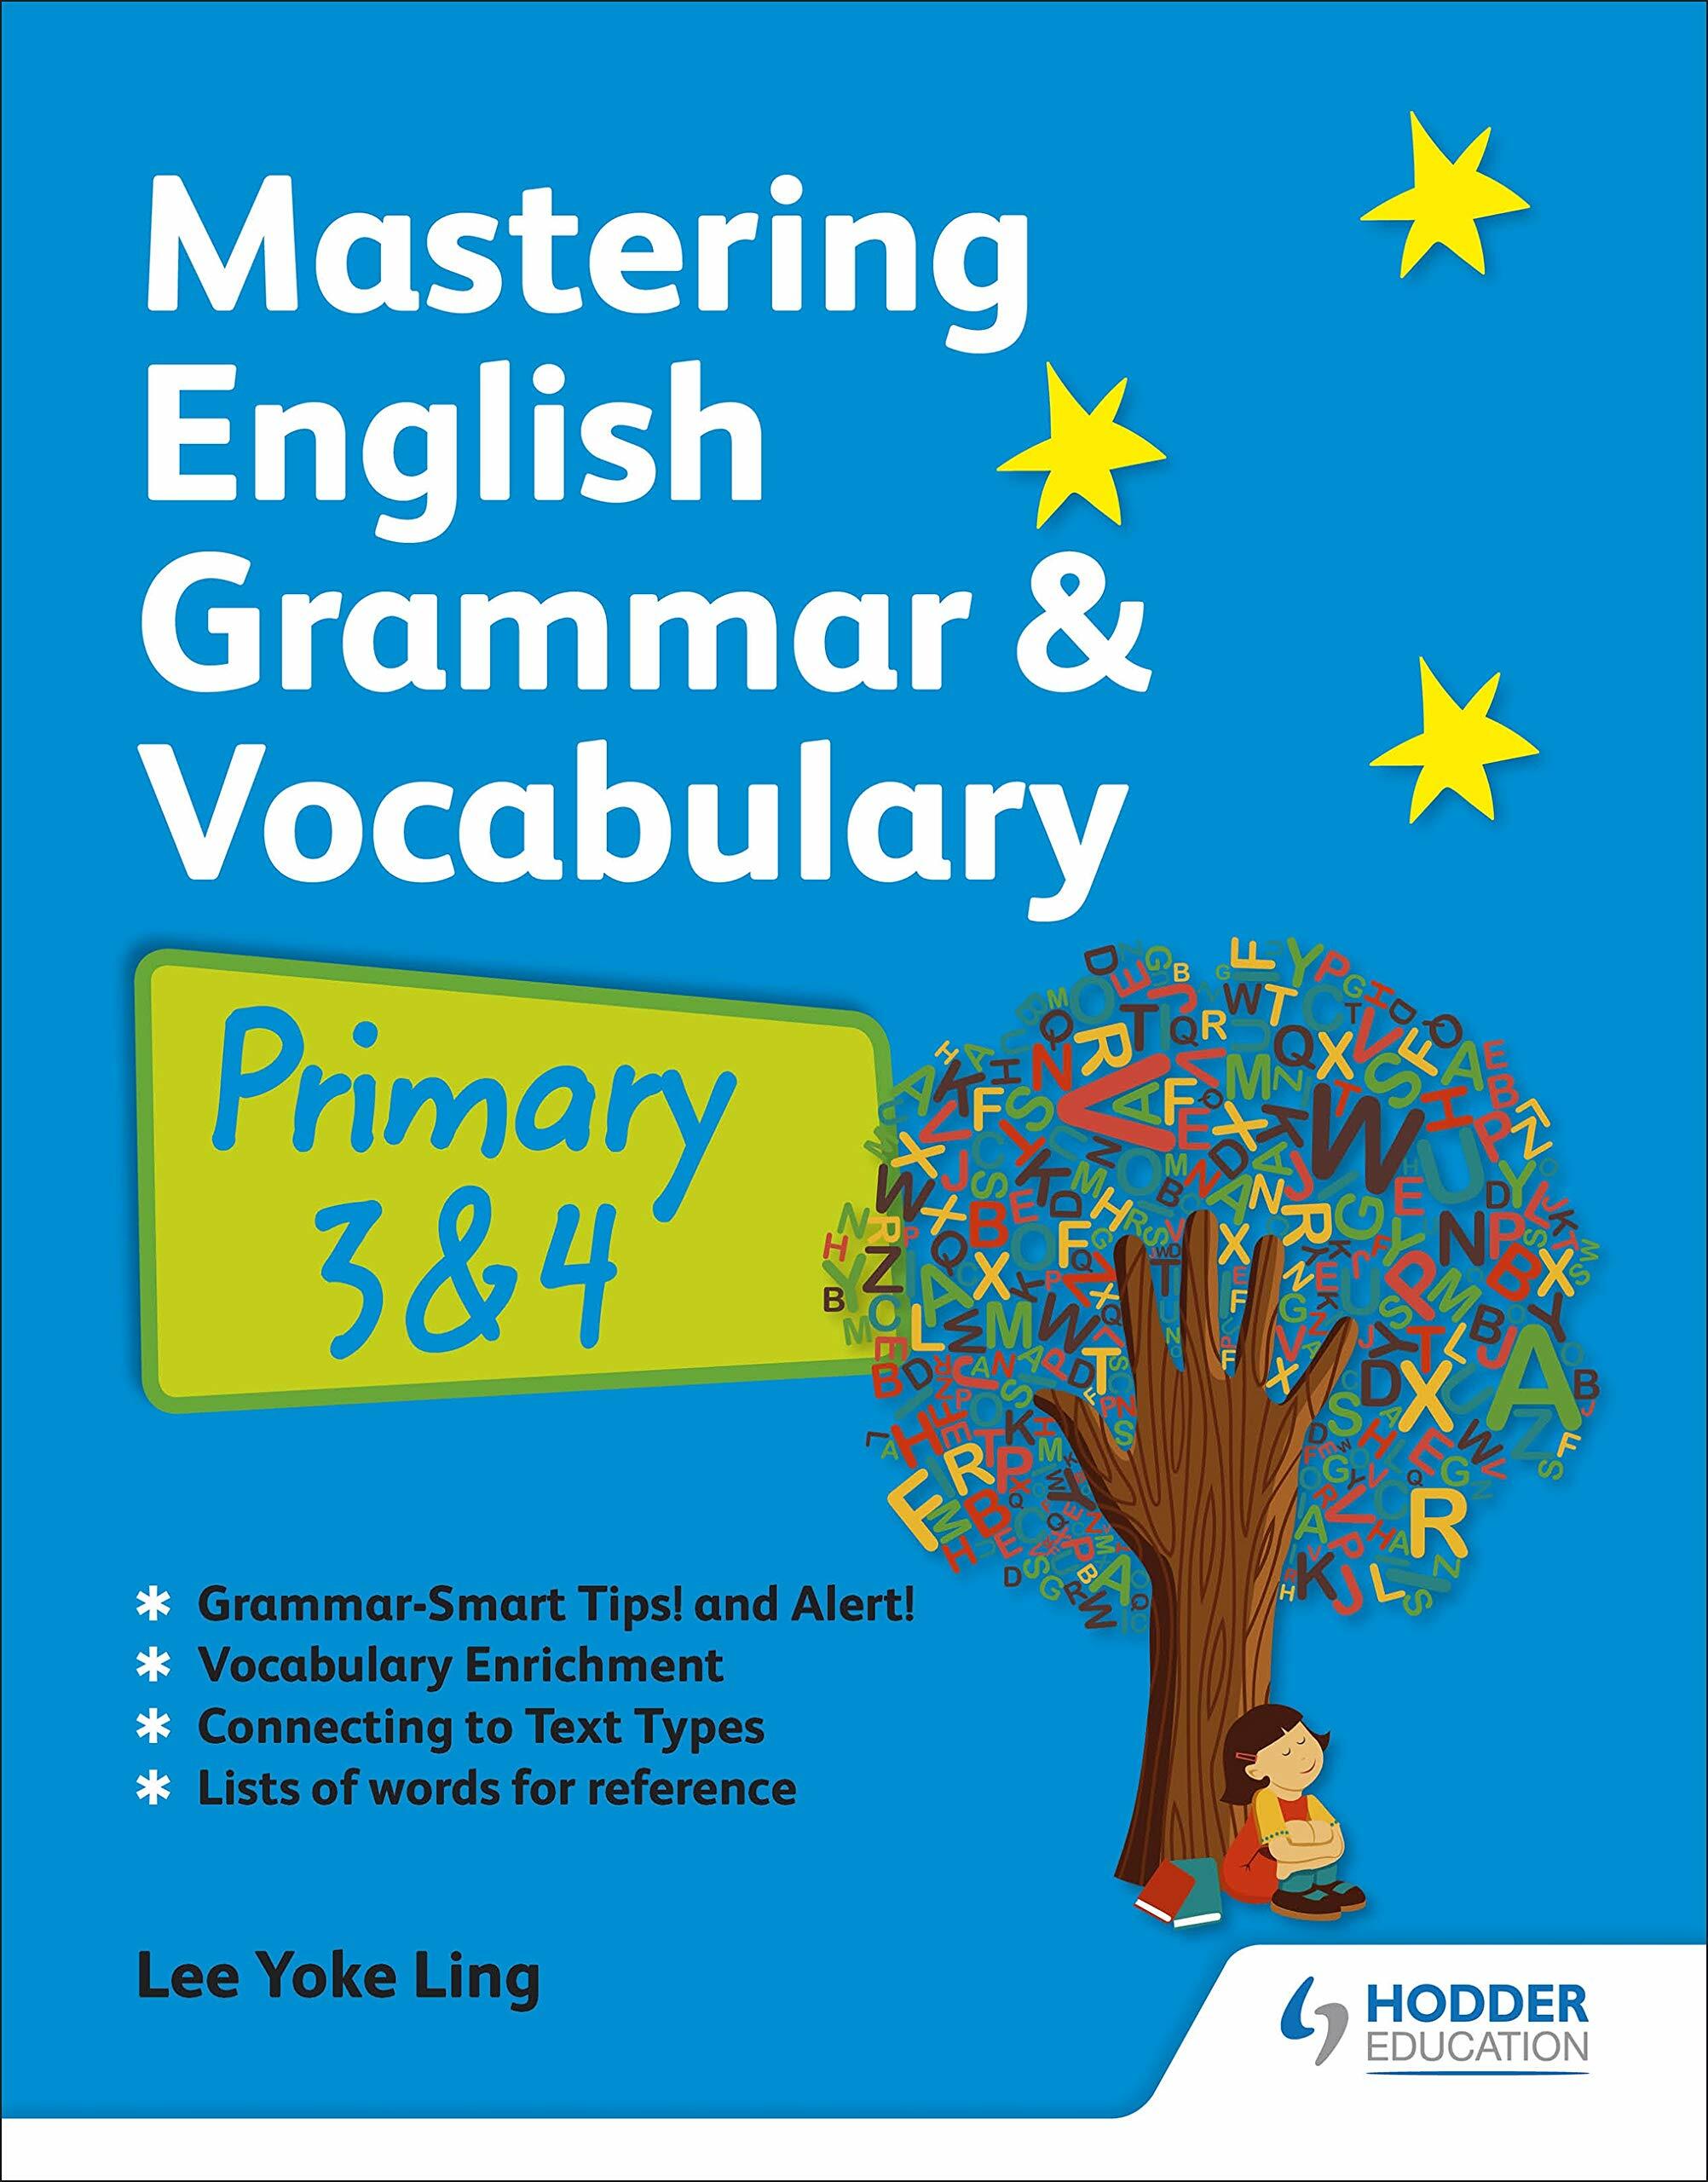 Mastering English Grammar & Vocabulary P3 & 4 (revised edition)